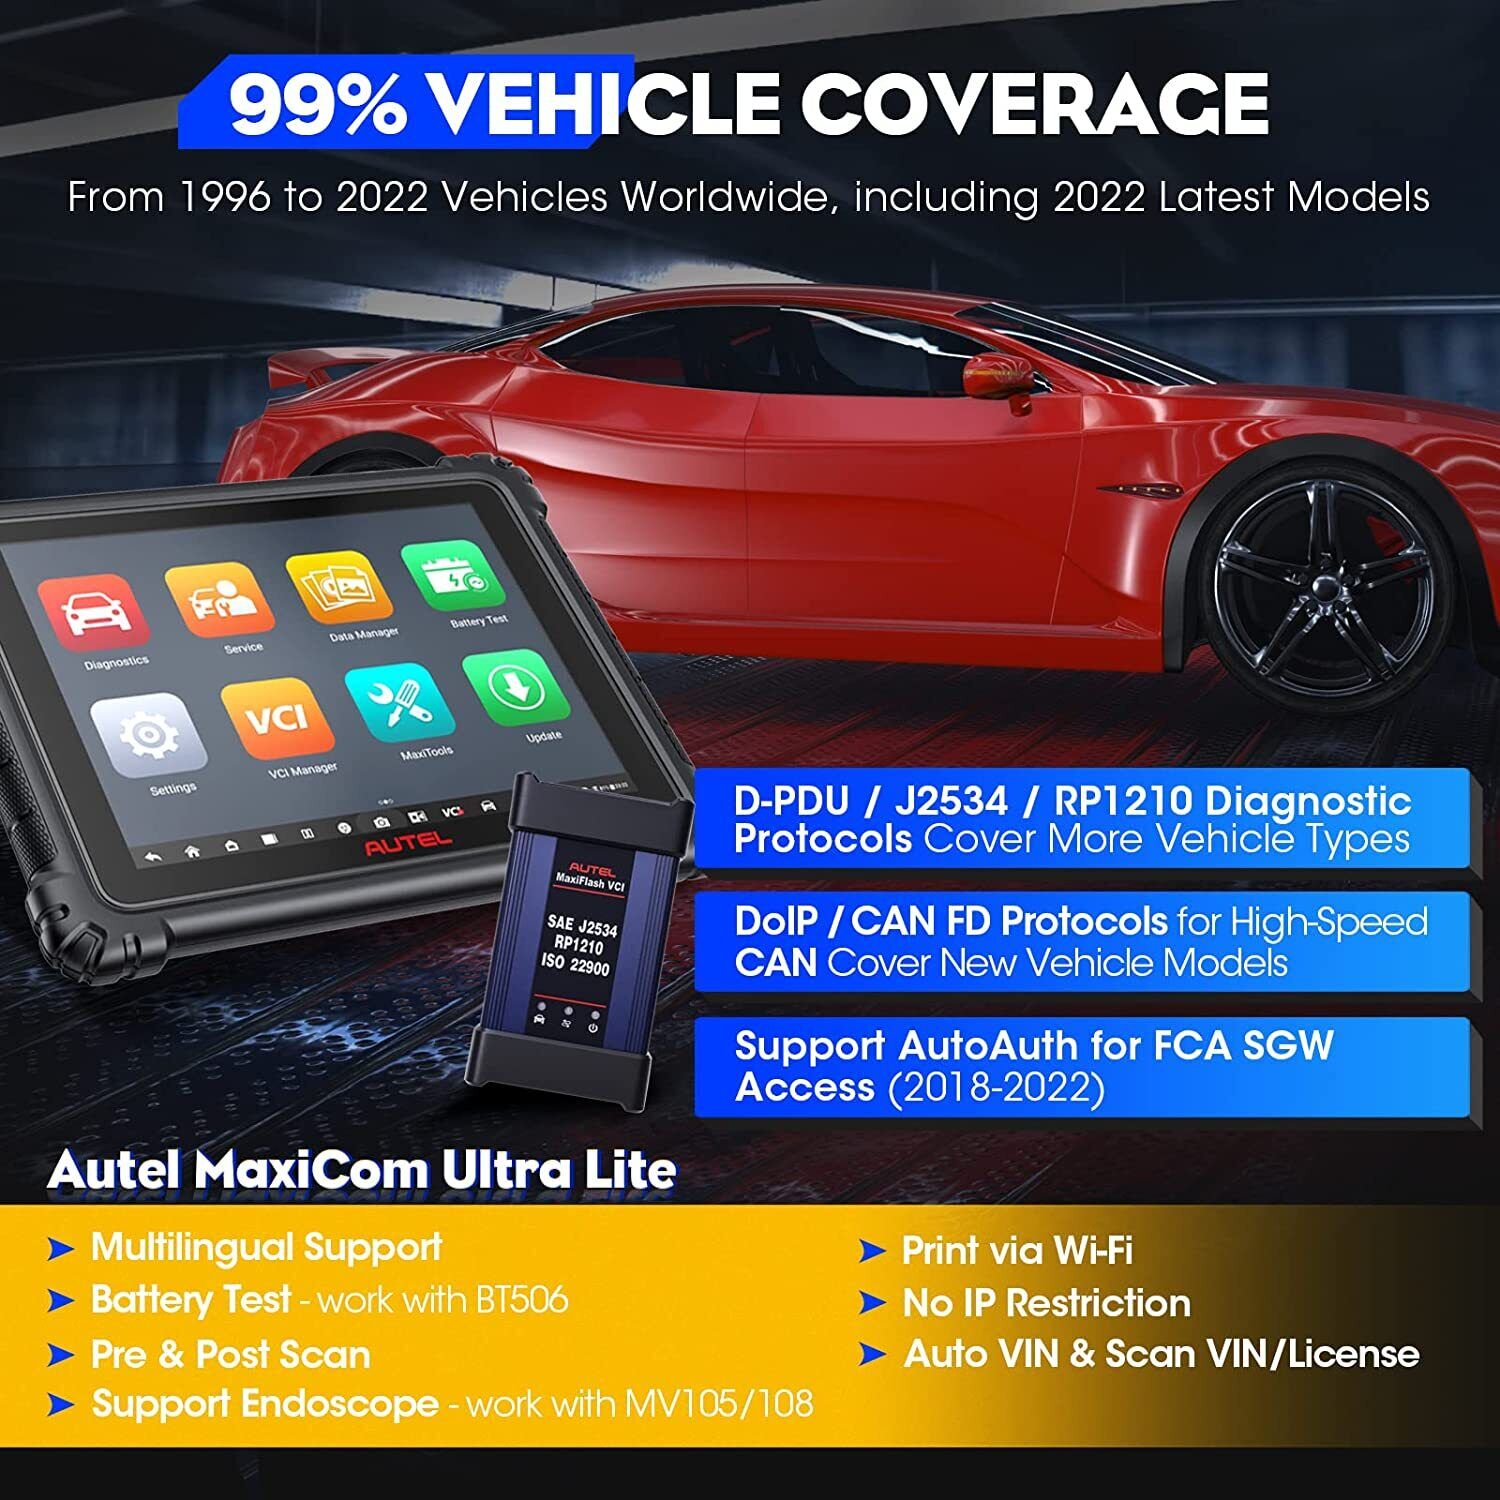 Autel MaxiSys Ultra Lite Automotive Full Systems Diagnostic Tool VCI ECU Coding, Advanced ECU Coding & Programming